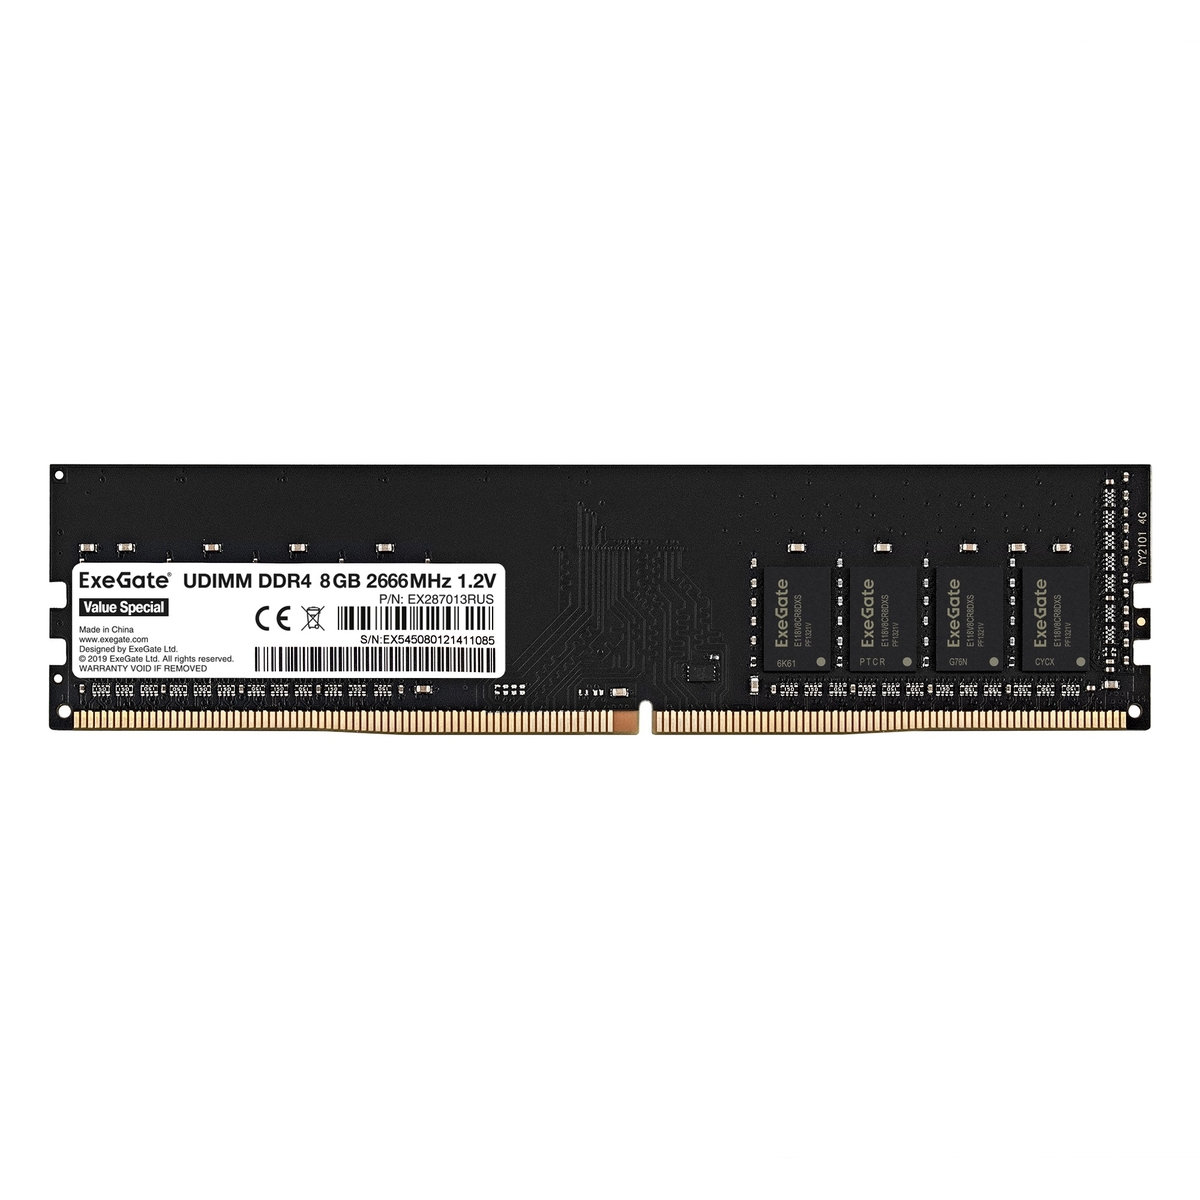 Память оперативная DDR4 ExeGate Value Special 8Gb 2666MHz pc-21300 (EX287013RUS) оперативная память 8gb ddr4 2666mhz corsair value select cmv8gx4m1a2666c18